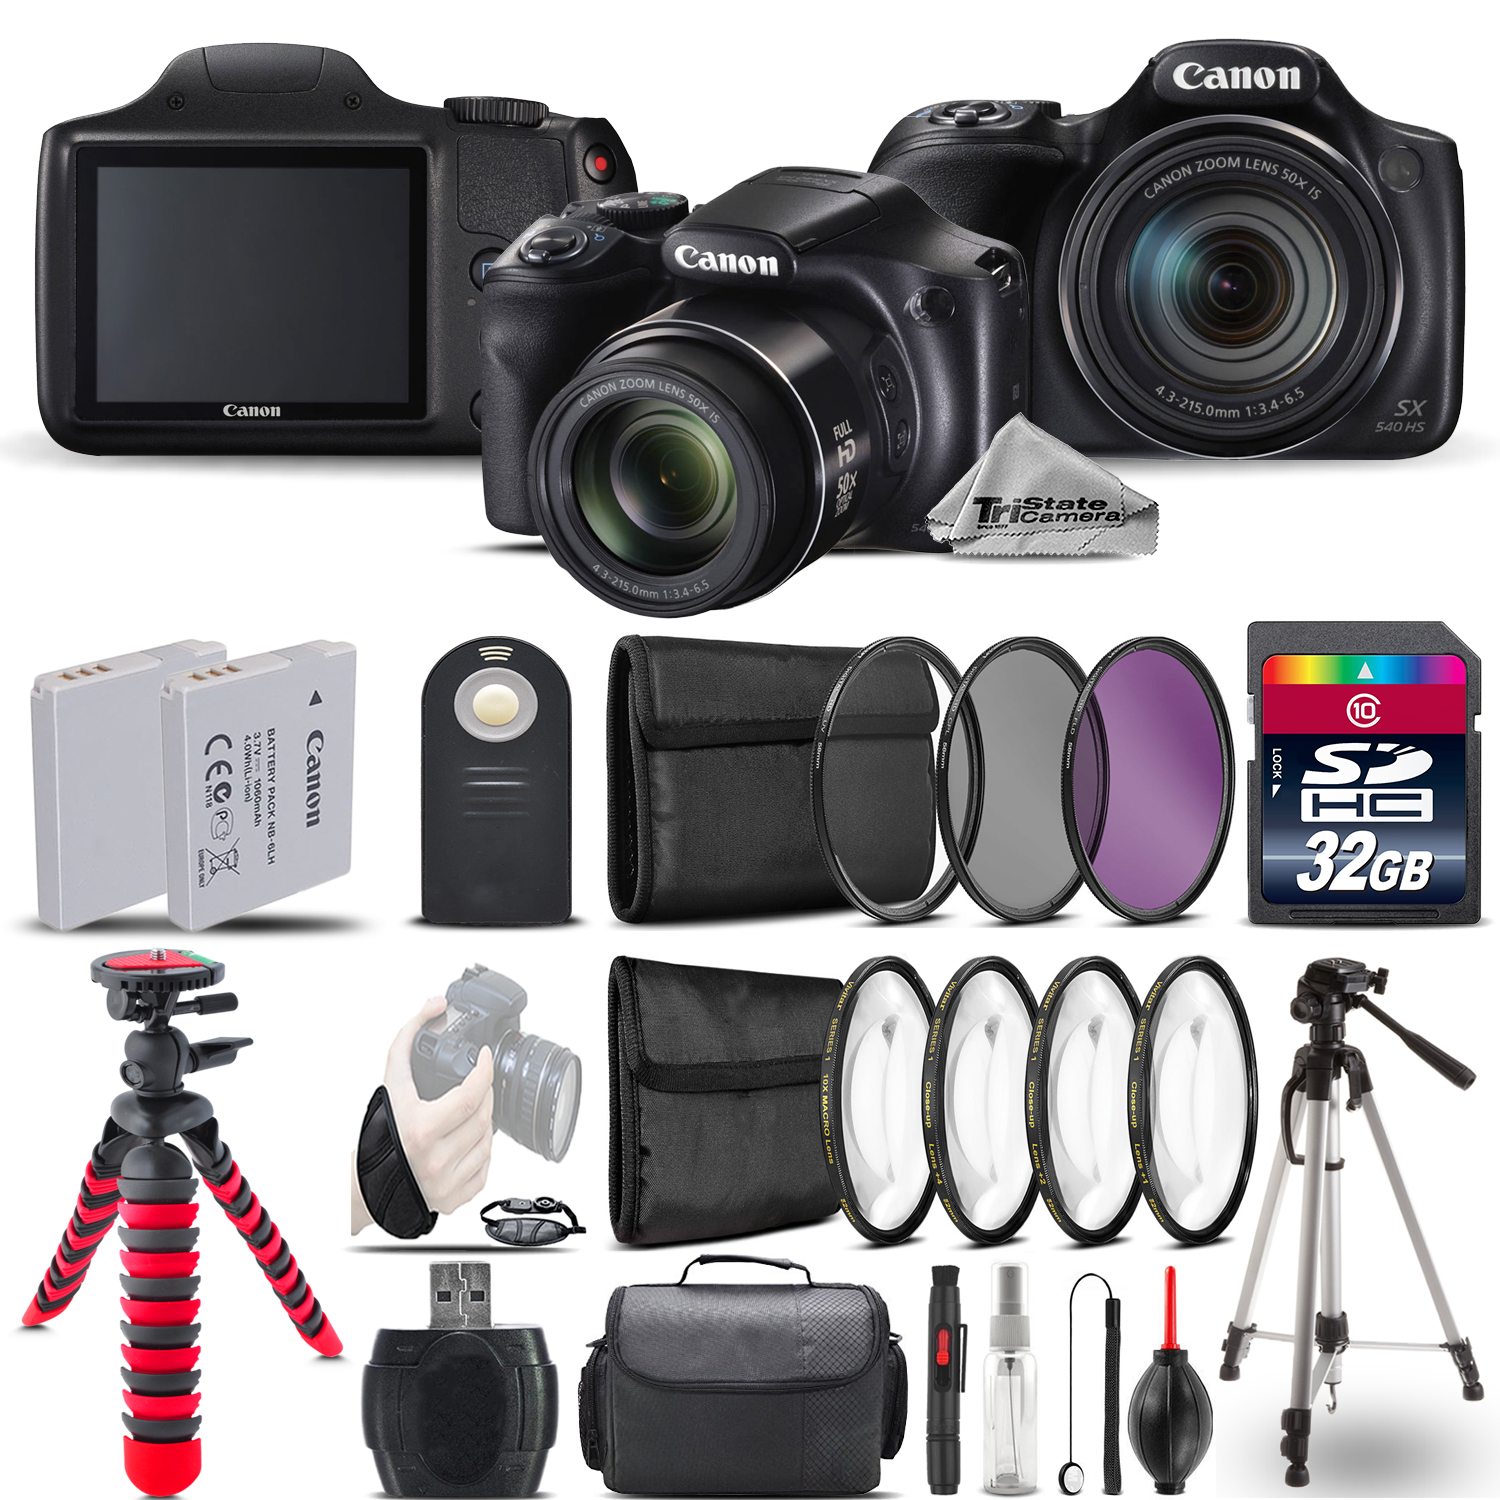 PowerShot SX540 HS Digital Camera + 2 x Tripod  + EXT BAT + Filter - 32GB *FREE SHIPPING*